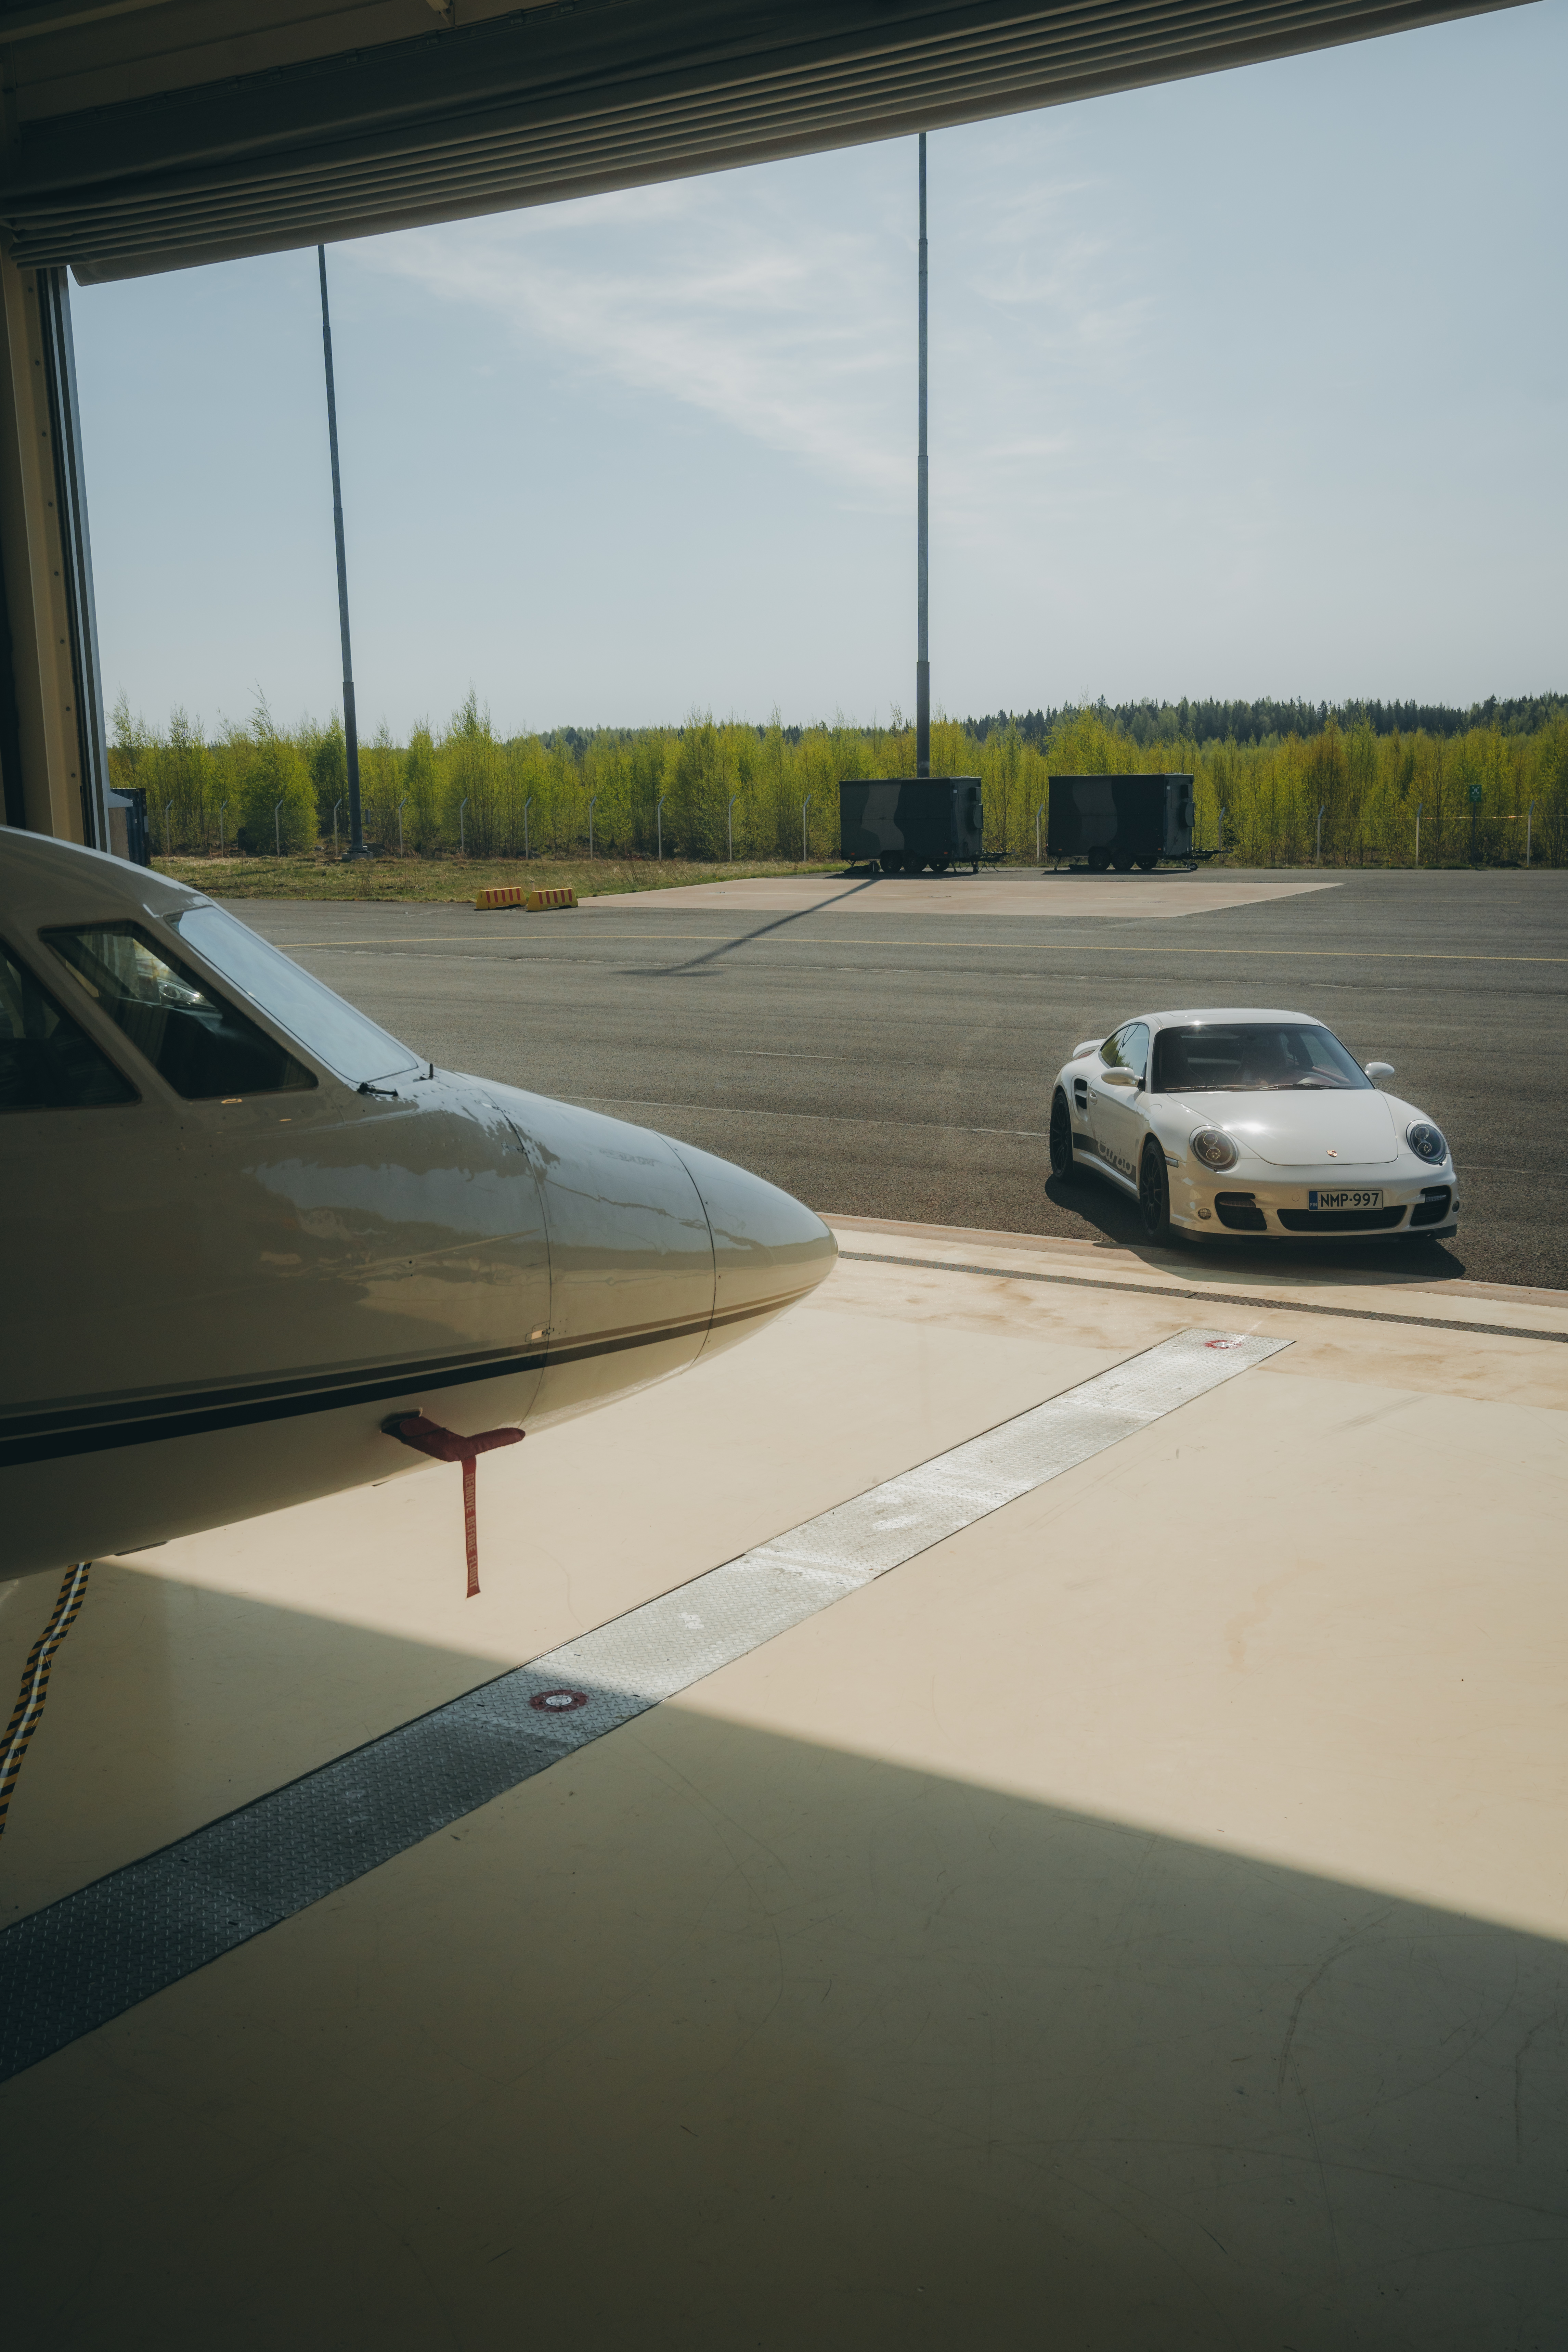 A white Porsche 911 (type 997) parked beside an airplane